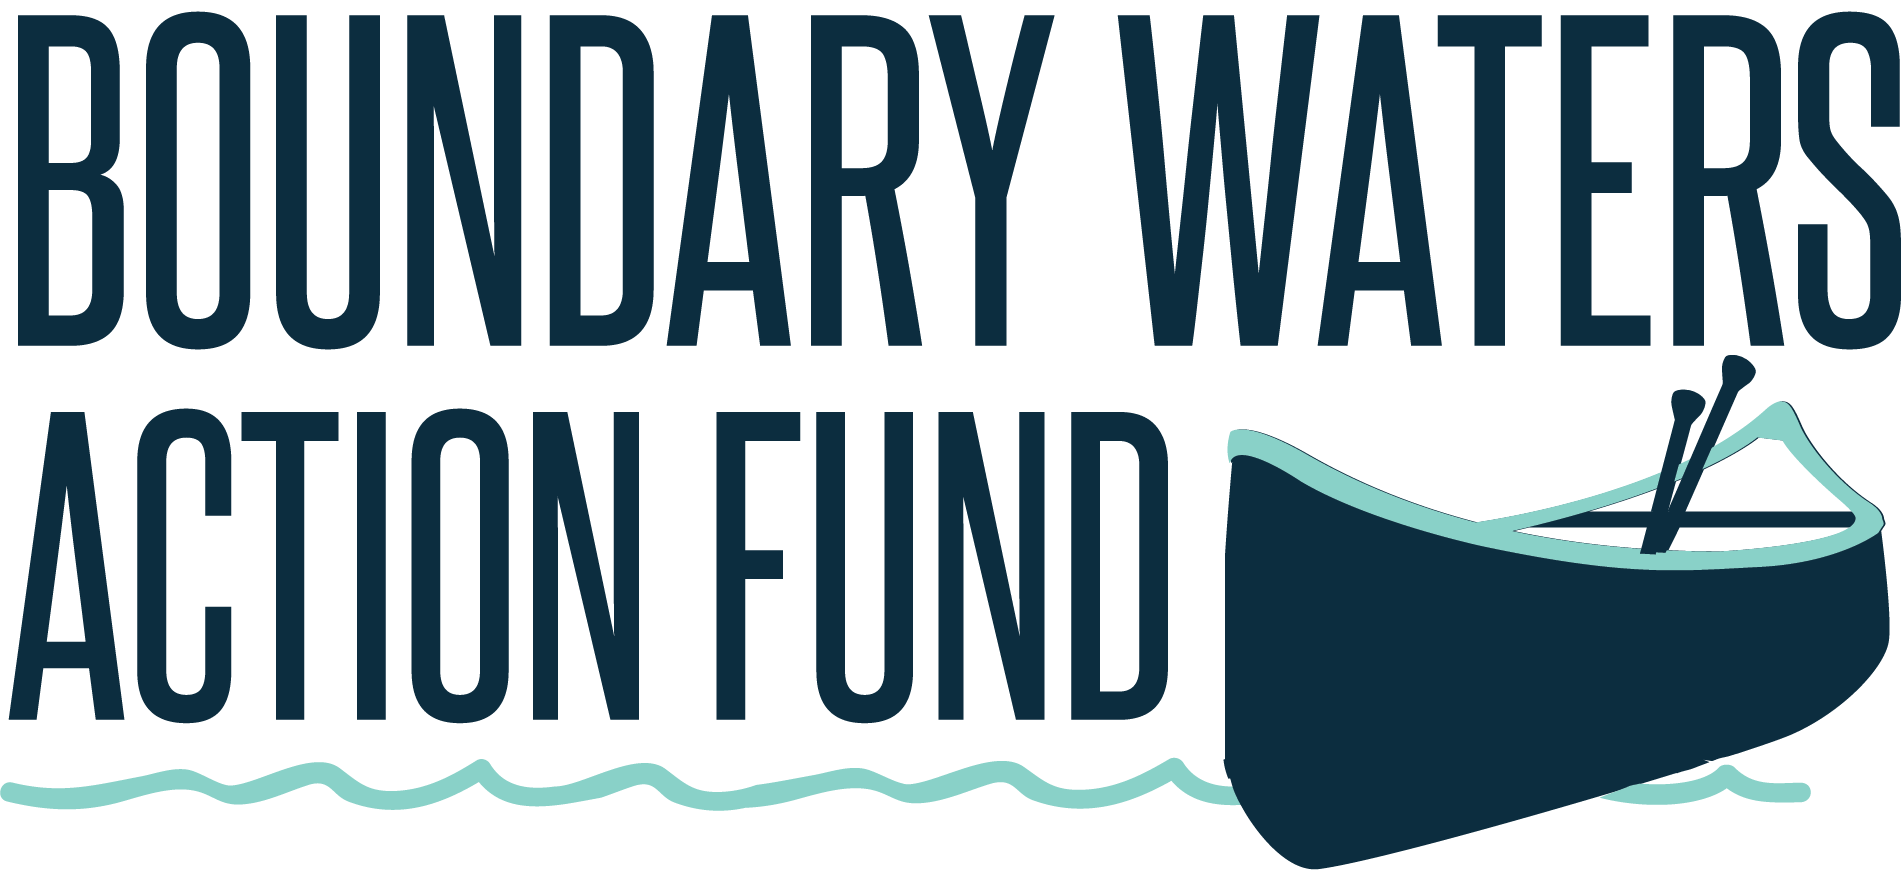 Boundary Waters Action Fund Canoe Logo